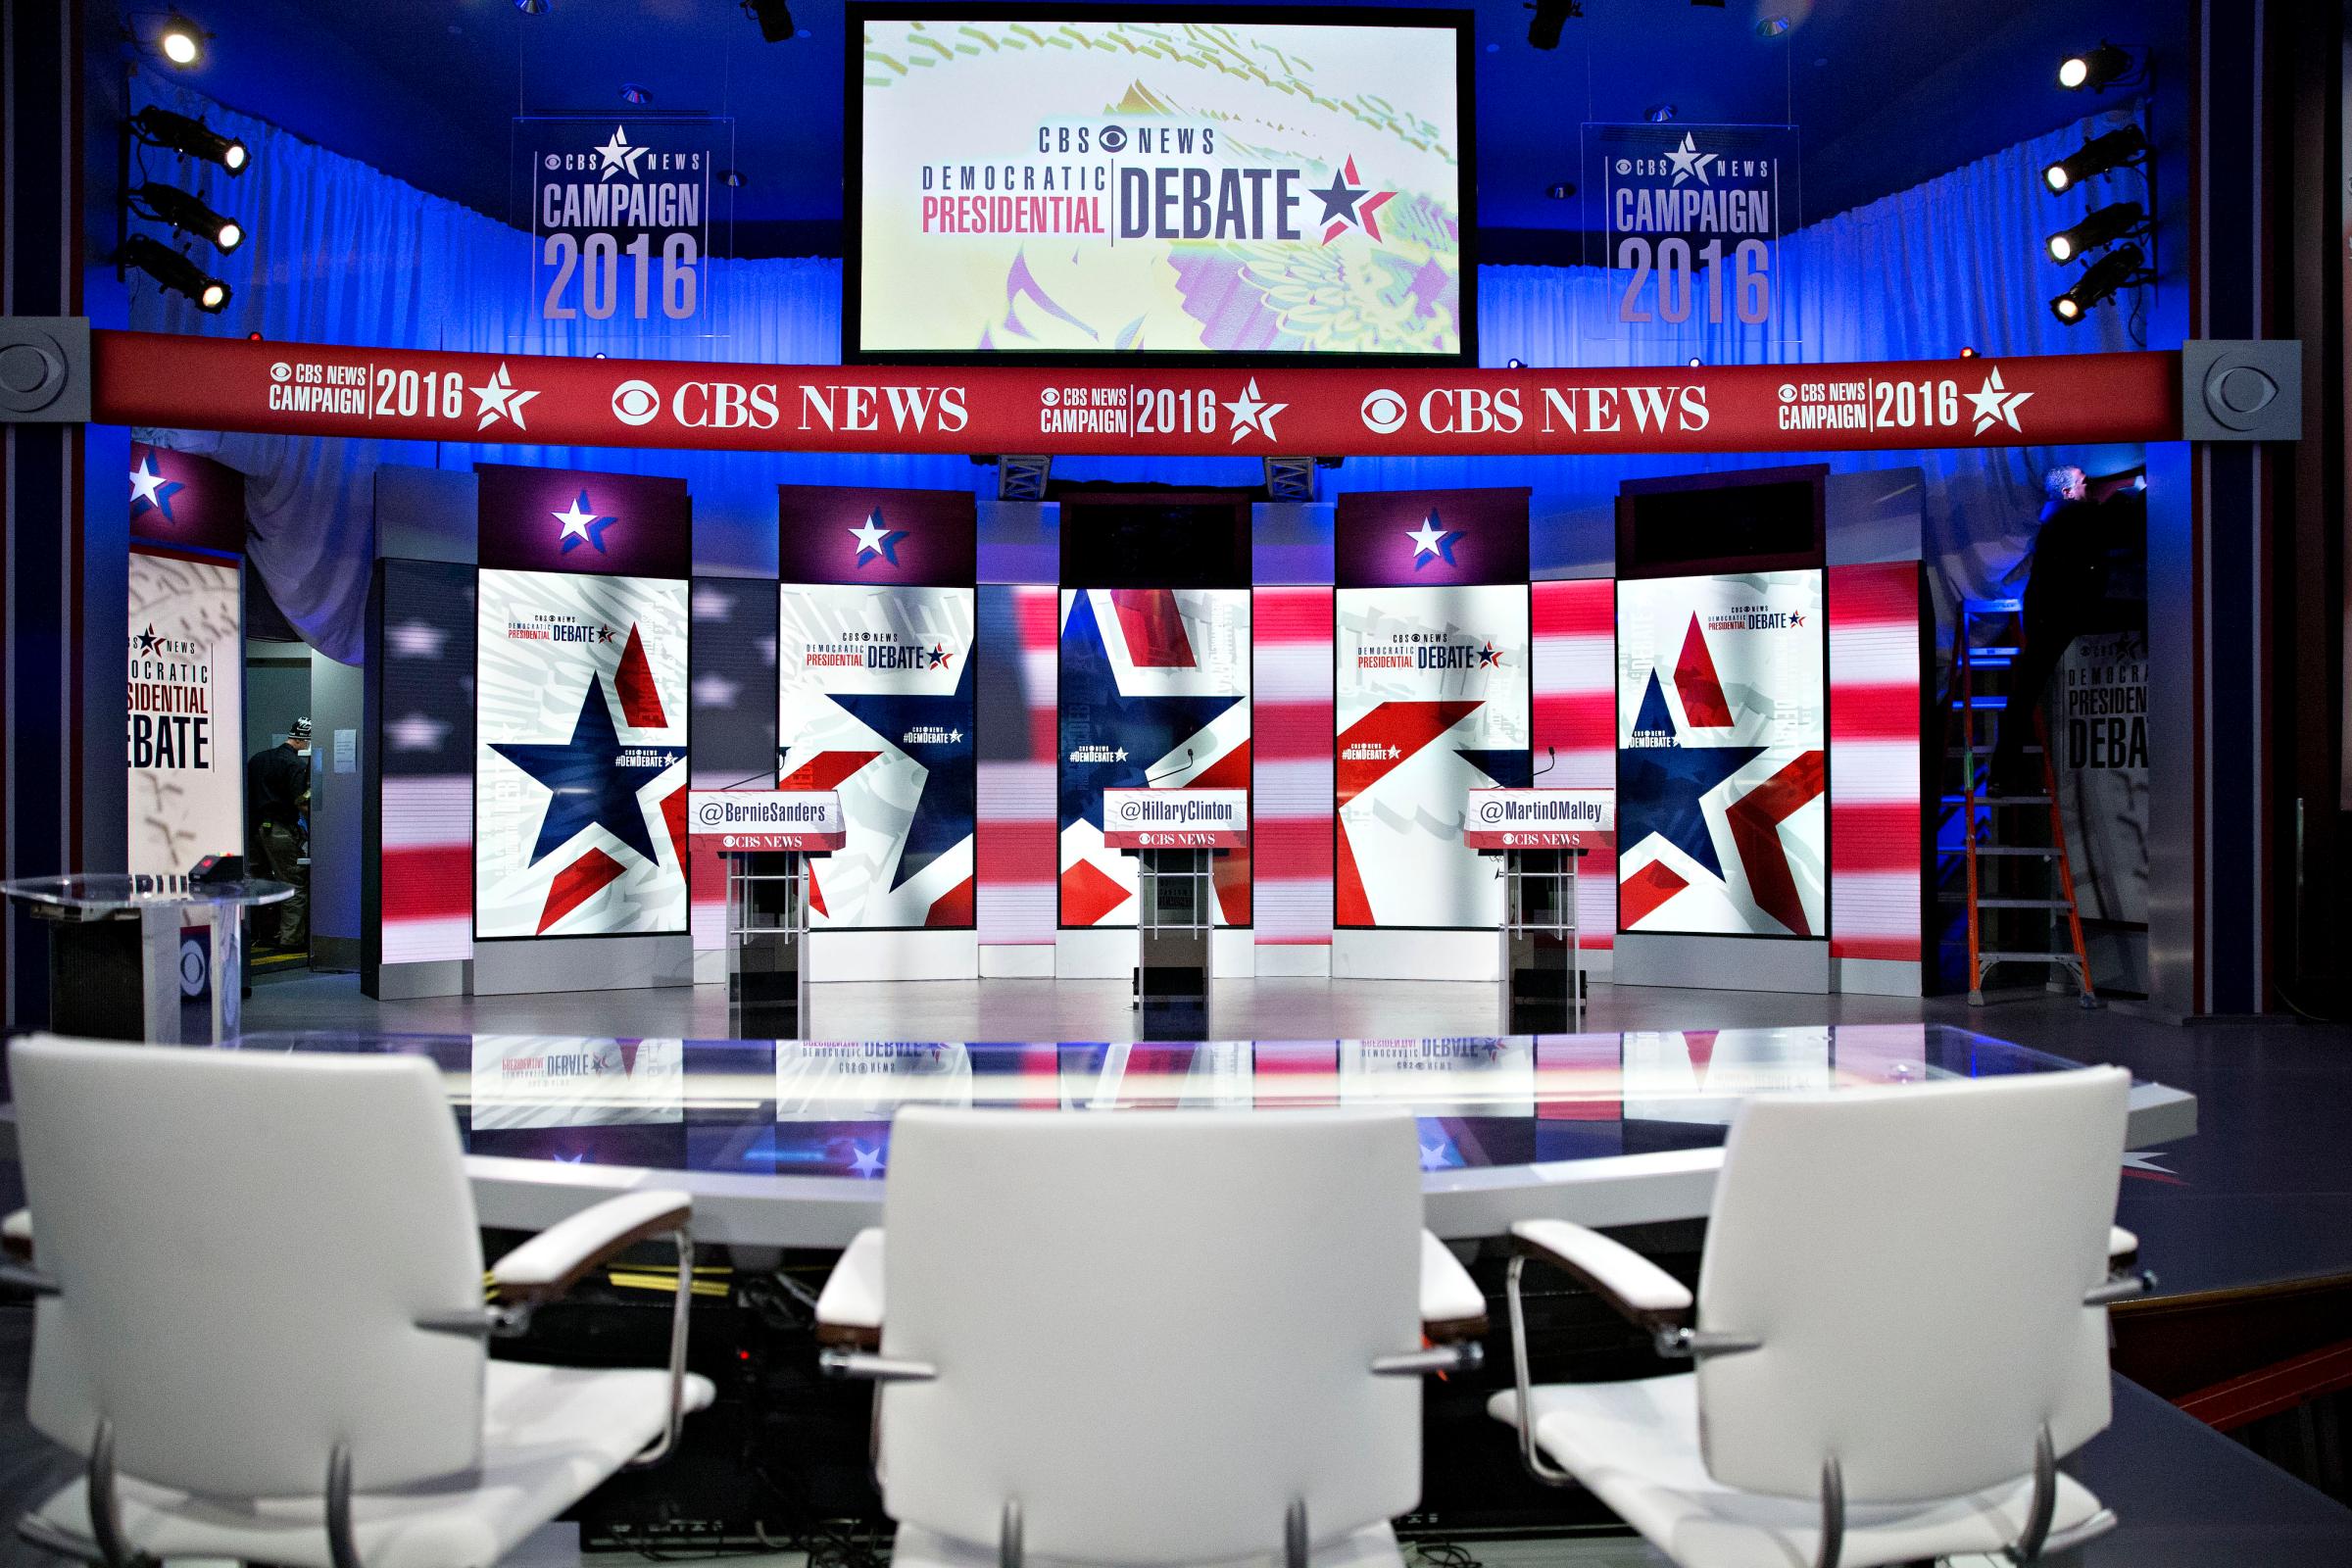 The Democratic presidential candidate debate venue at Drake University in Des Moines, Iowa, on Saturday, Nov. 14, 2015.